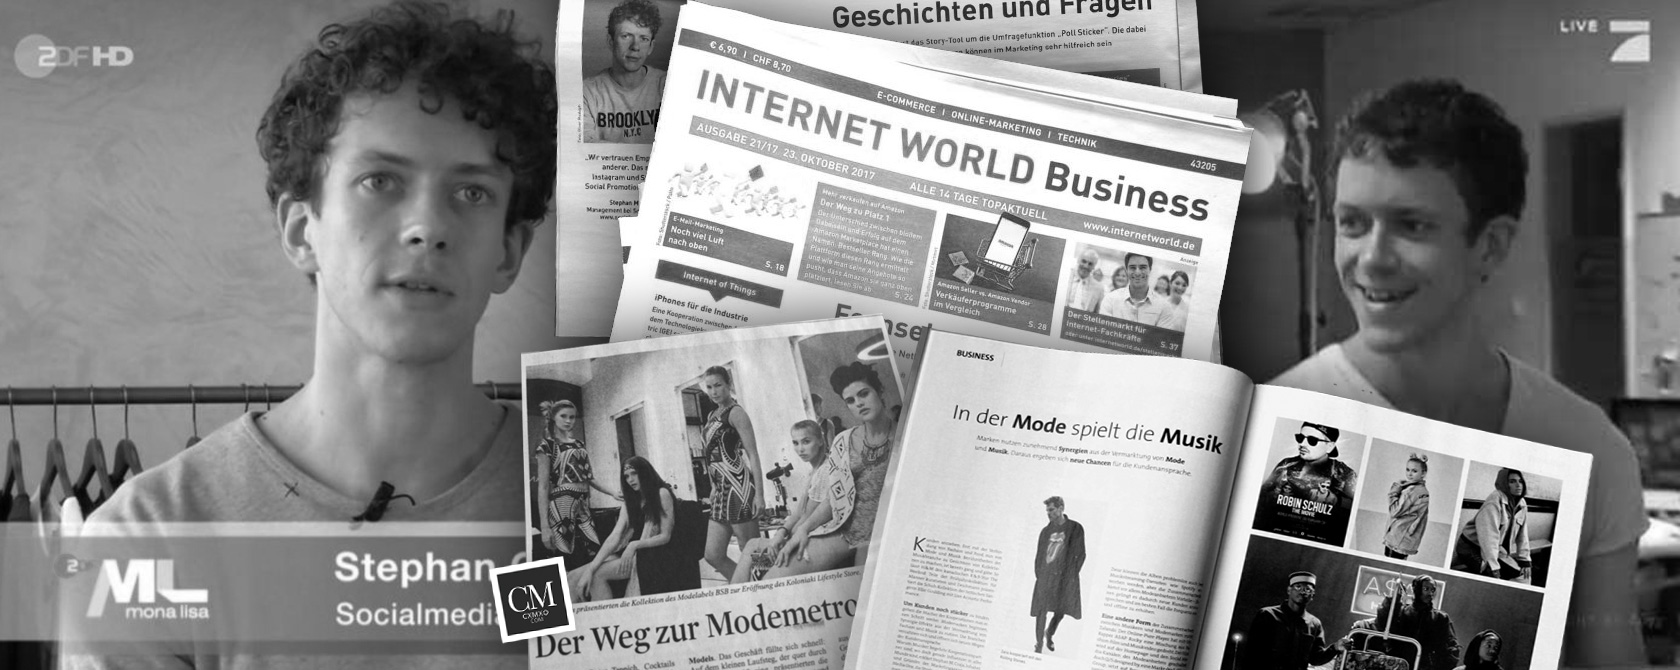 social-media-experte-stephan-czaja-berlin-hamburg-koeln-muenchen-tv-presse-medienberichte-berater-pro7-sat1-zdf-deutschlandfunk